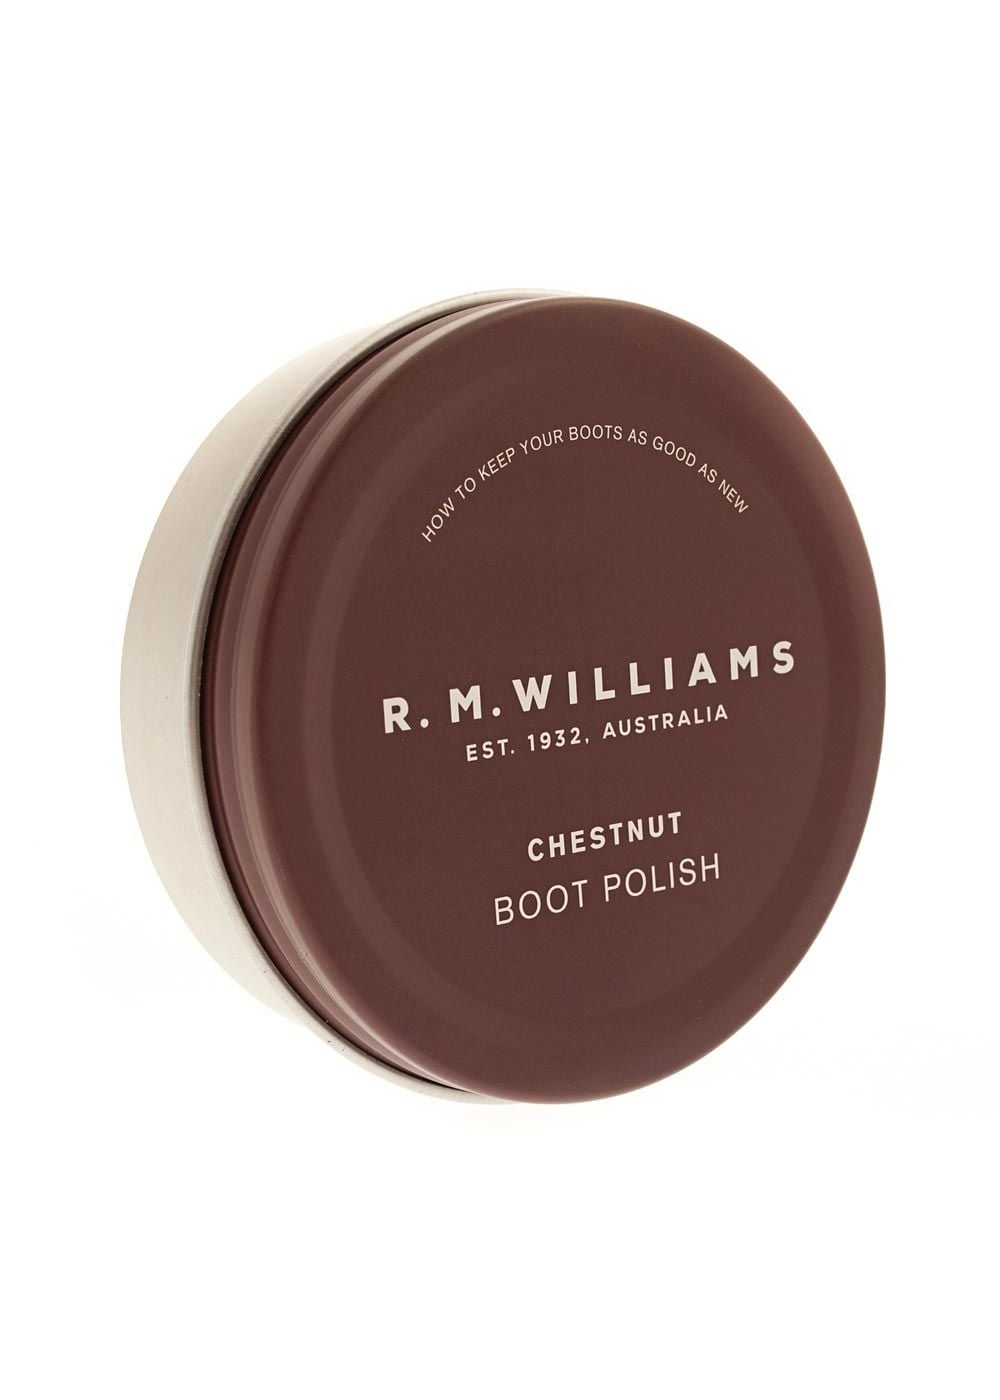 R M Williams Boot Polish - Chestnut